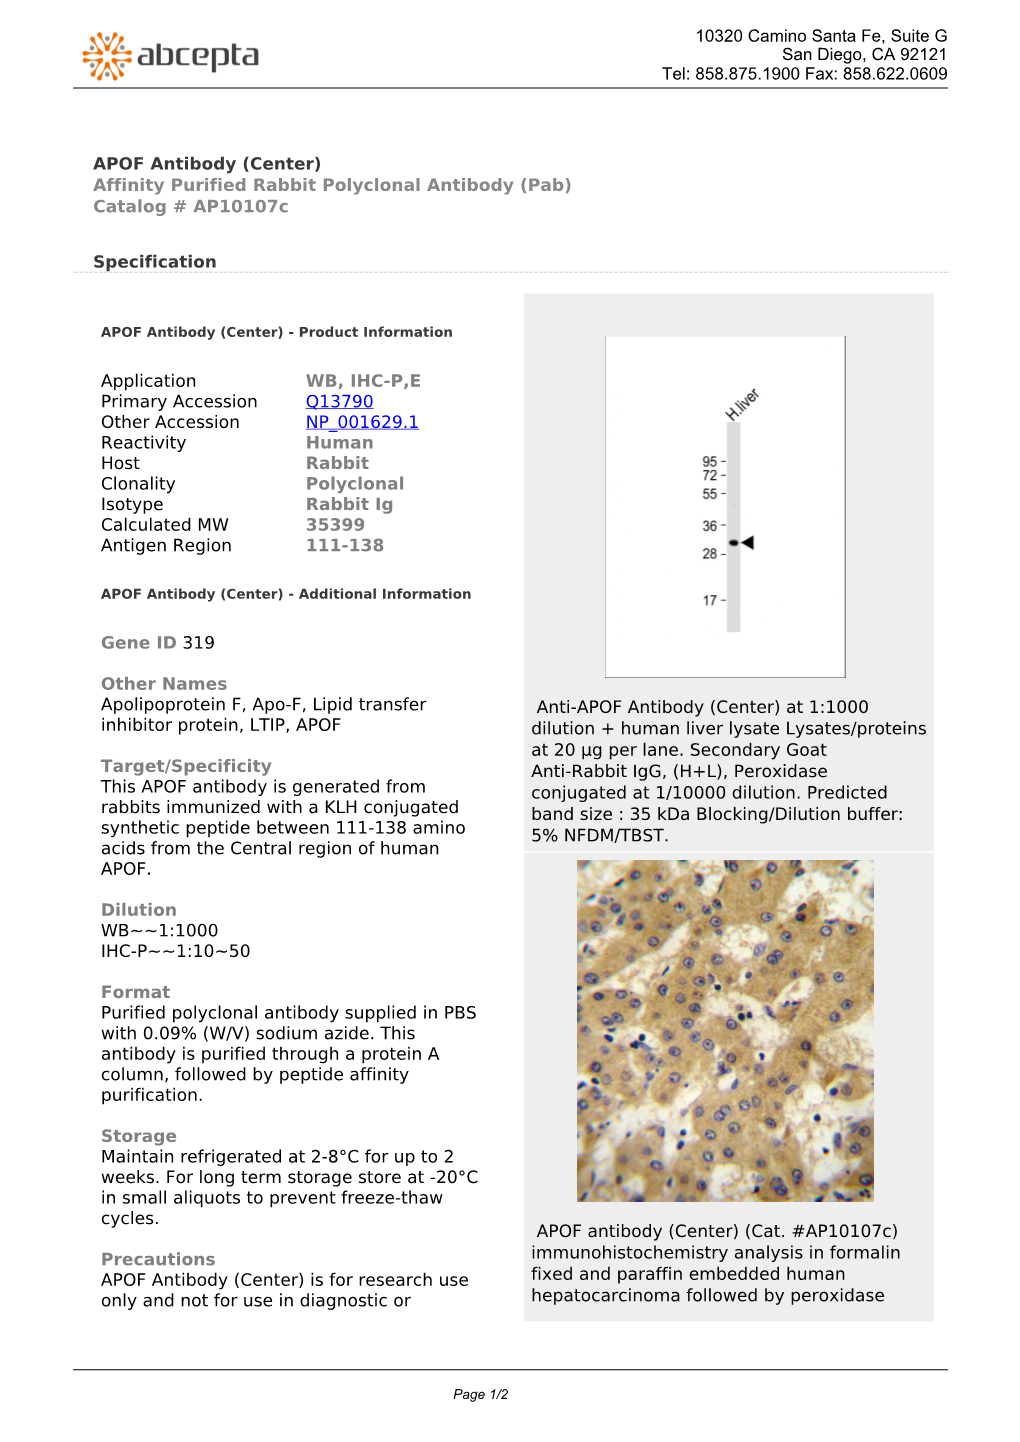 APOF Antibody (Center) Affinity Purified Rabbit Polyclonal Antibody (Pab) Catalog # Ap10107c